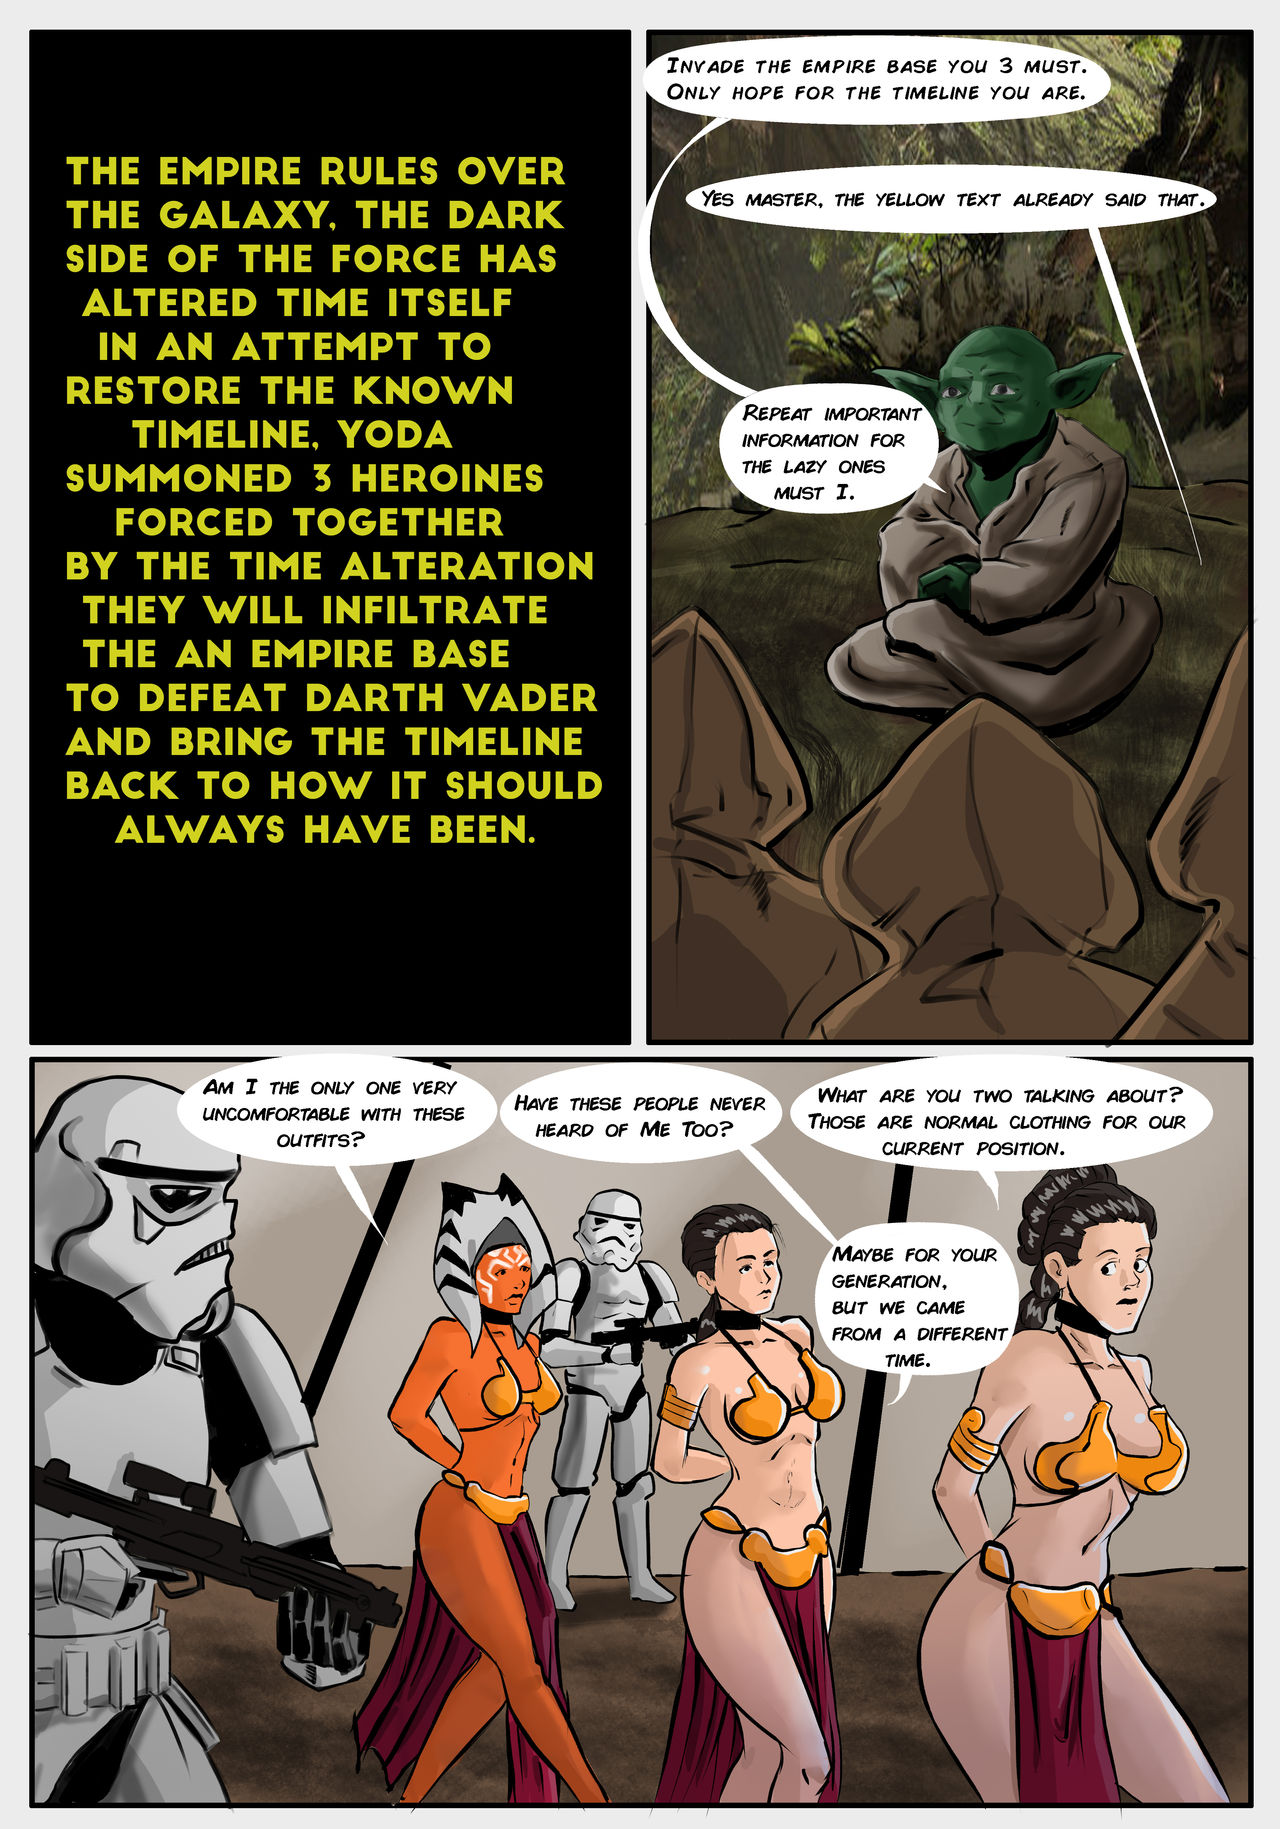 Star wars naked comic